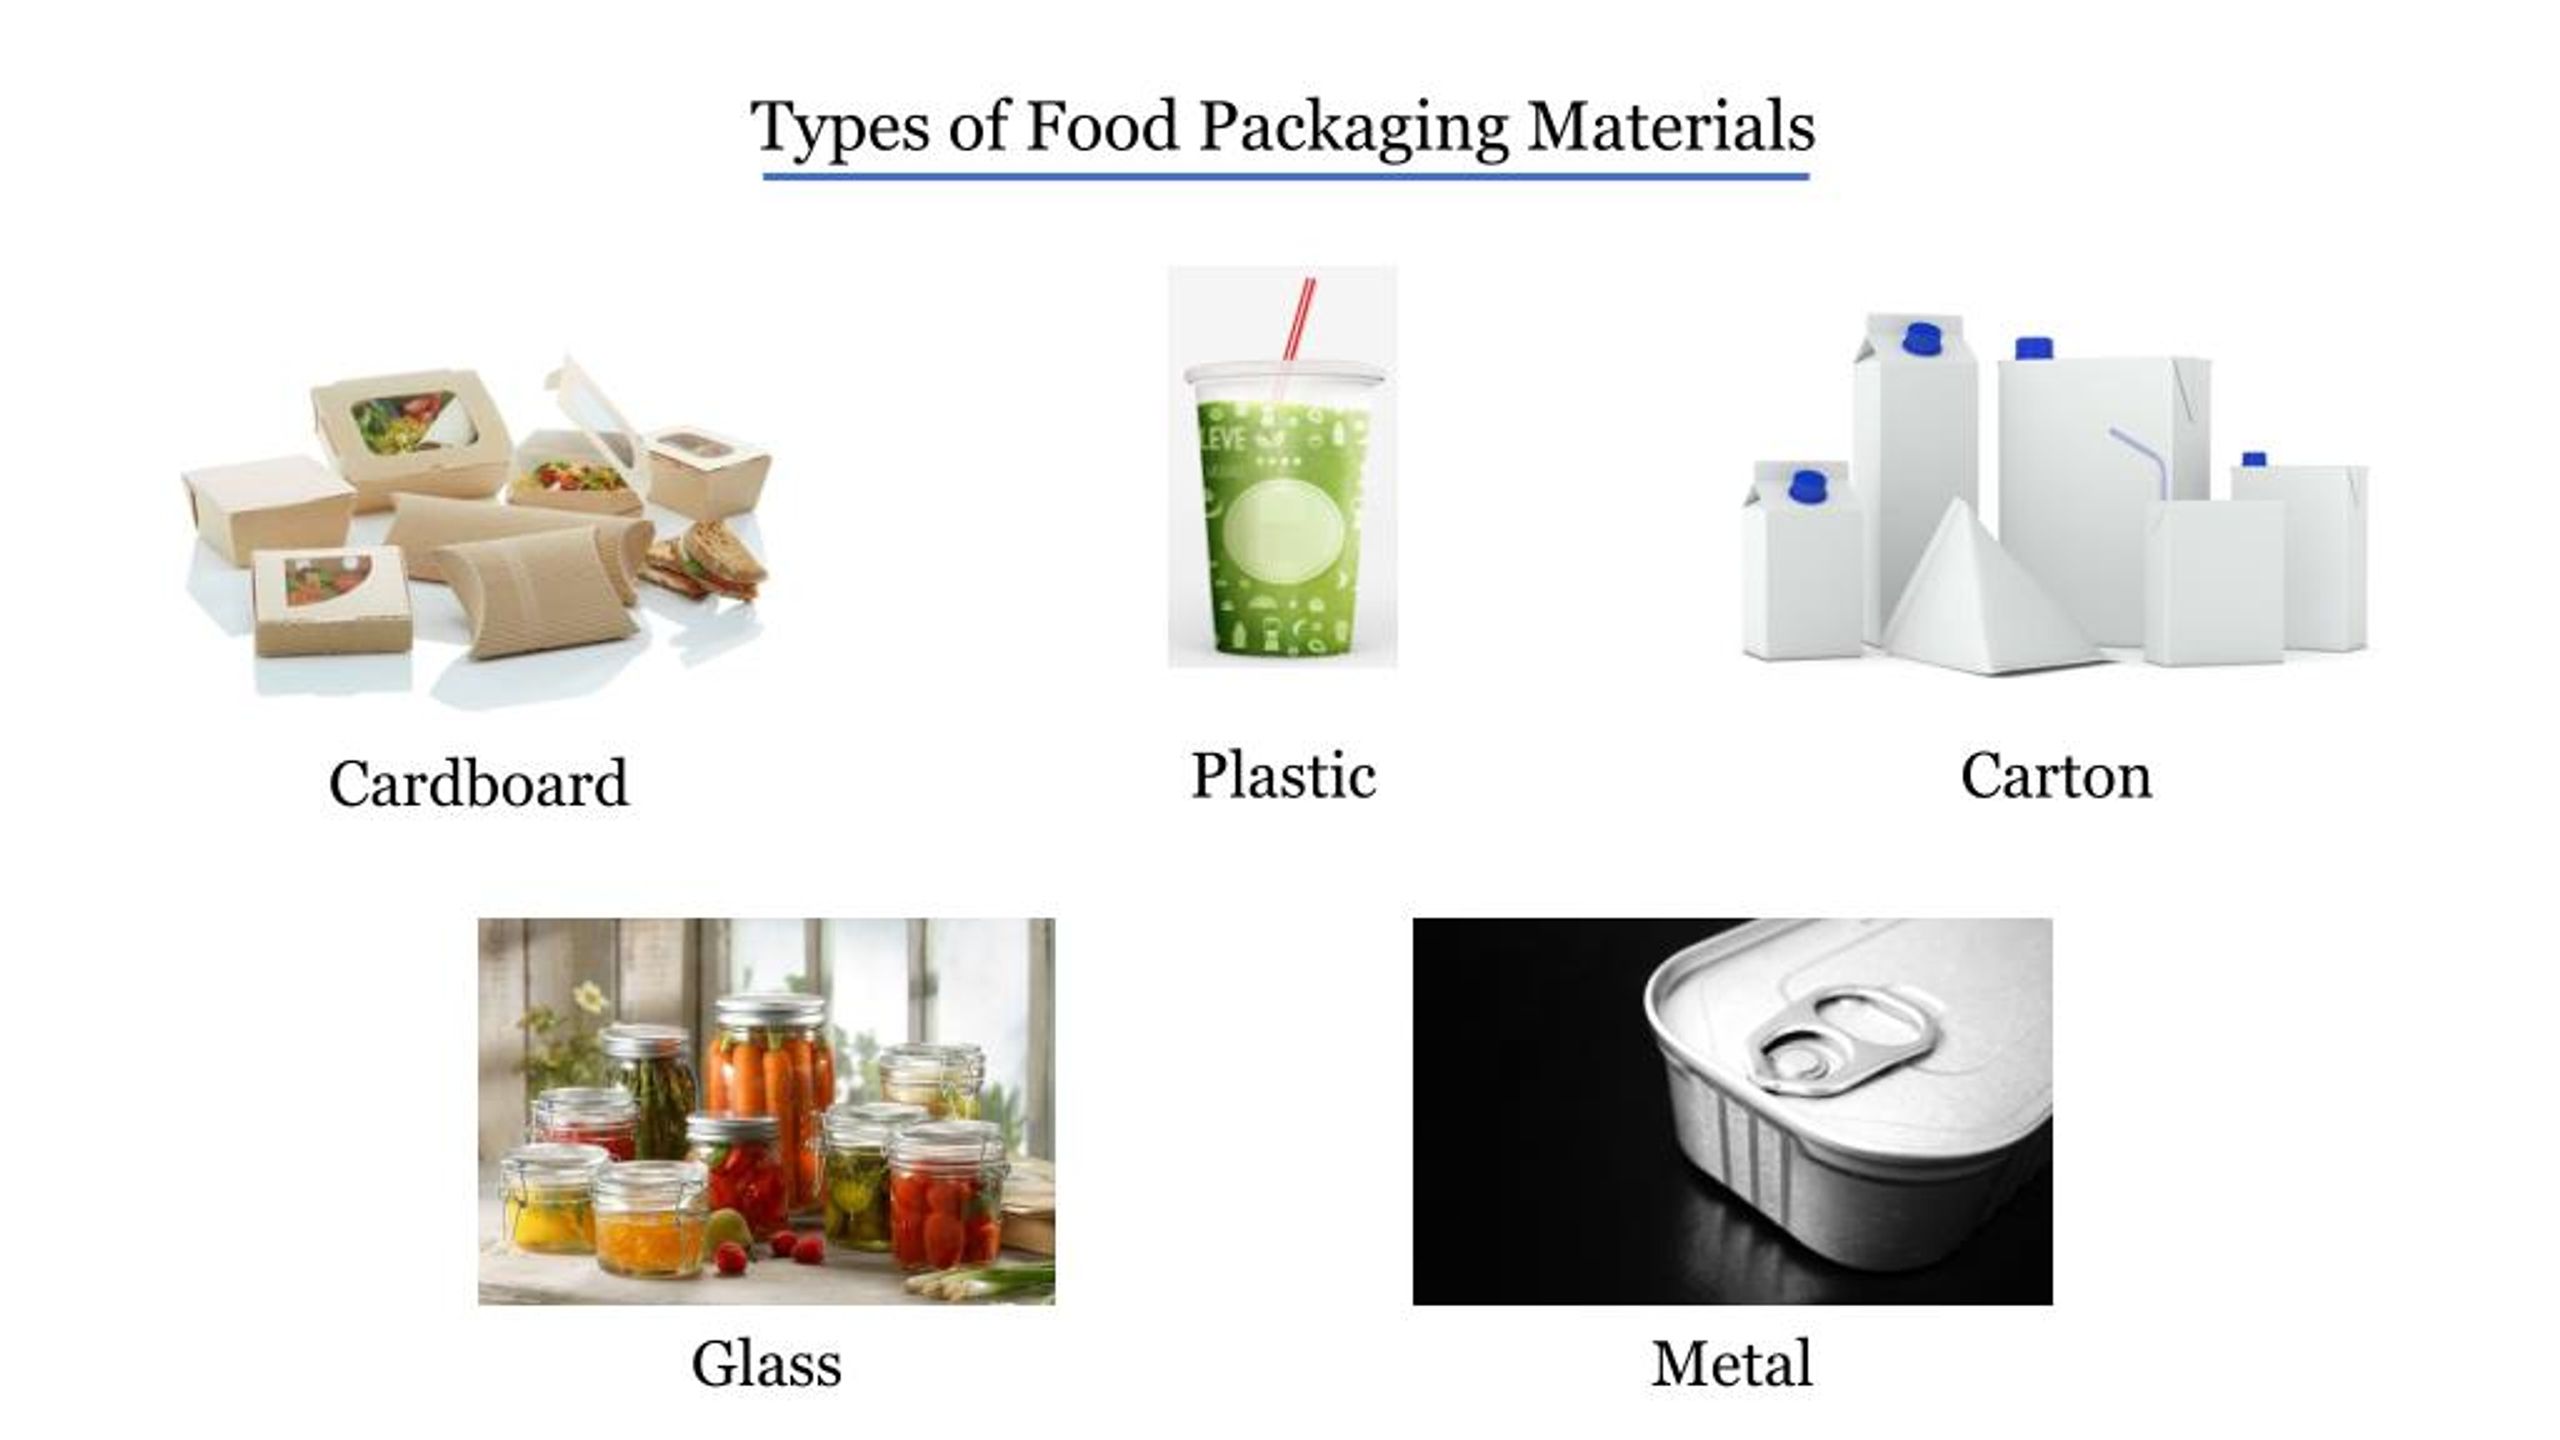 https://image4.slideserve.com/7618594/types-of-food-packaging-materials-1-l.jpg